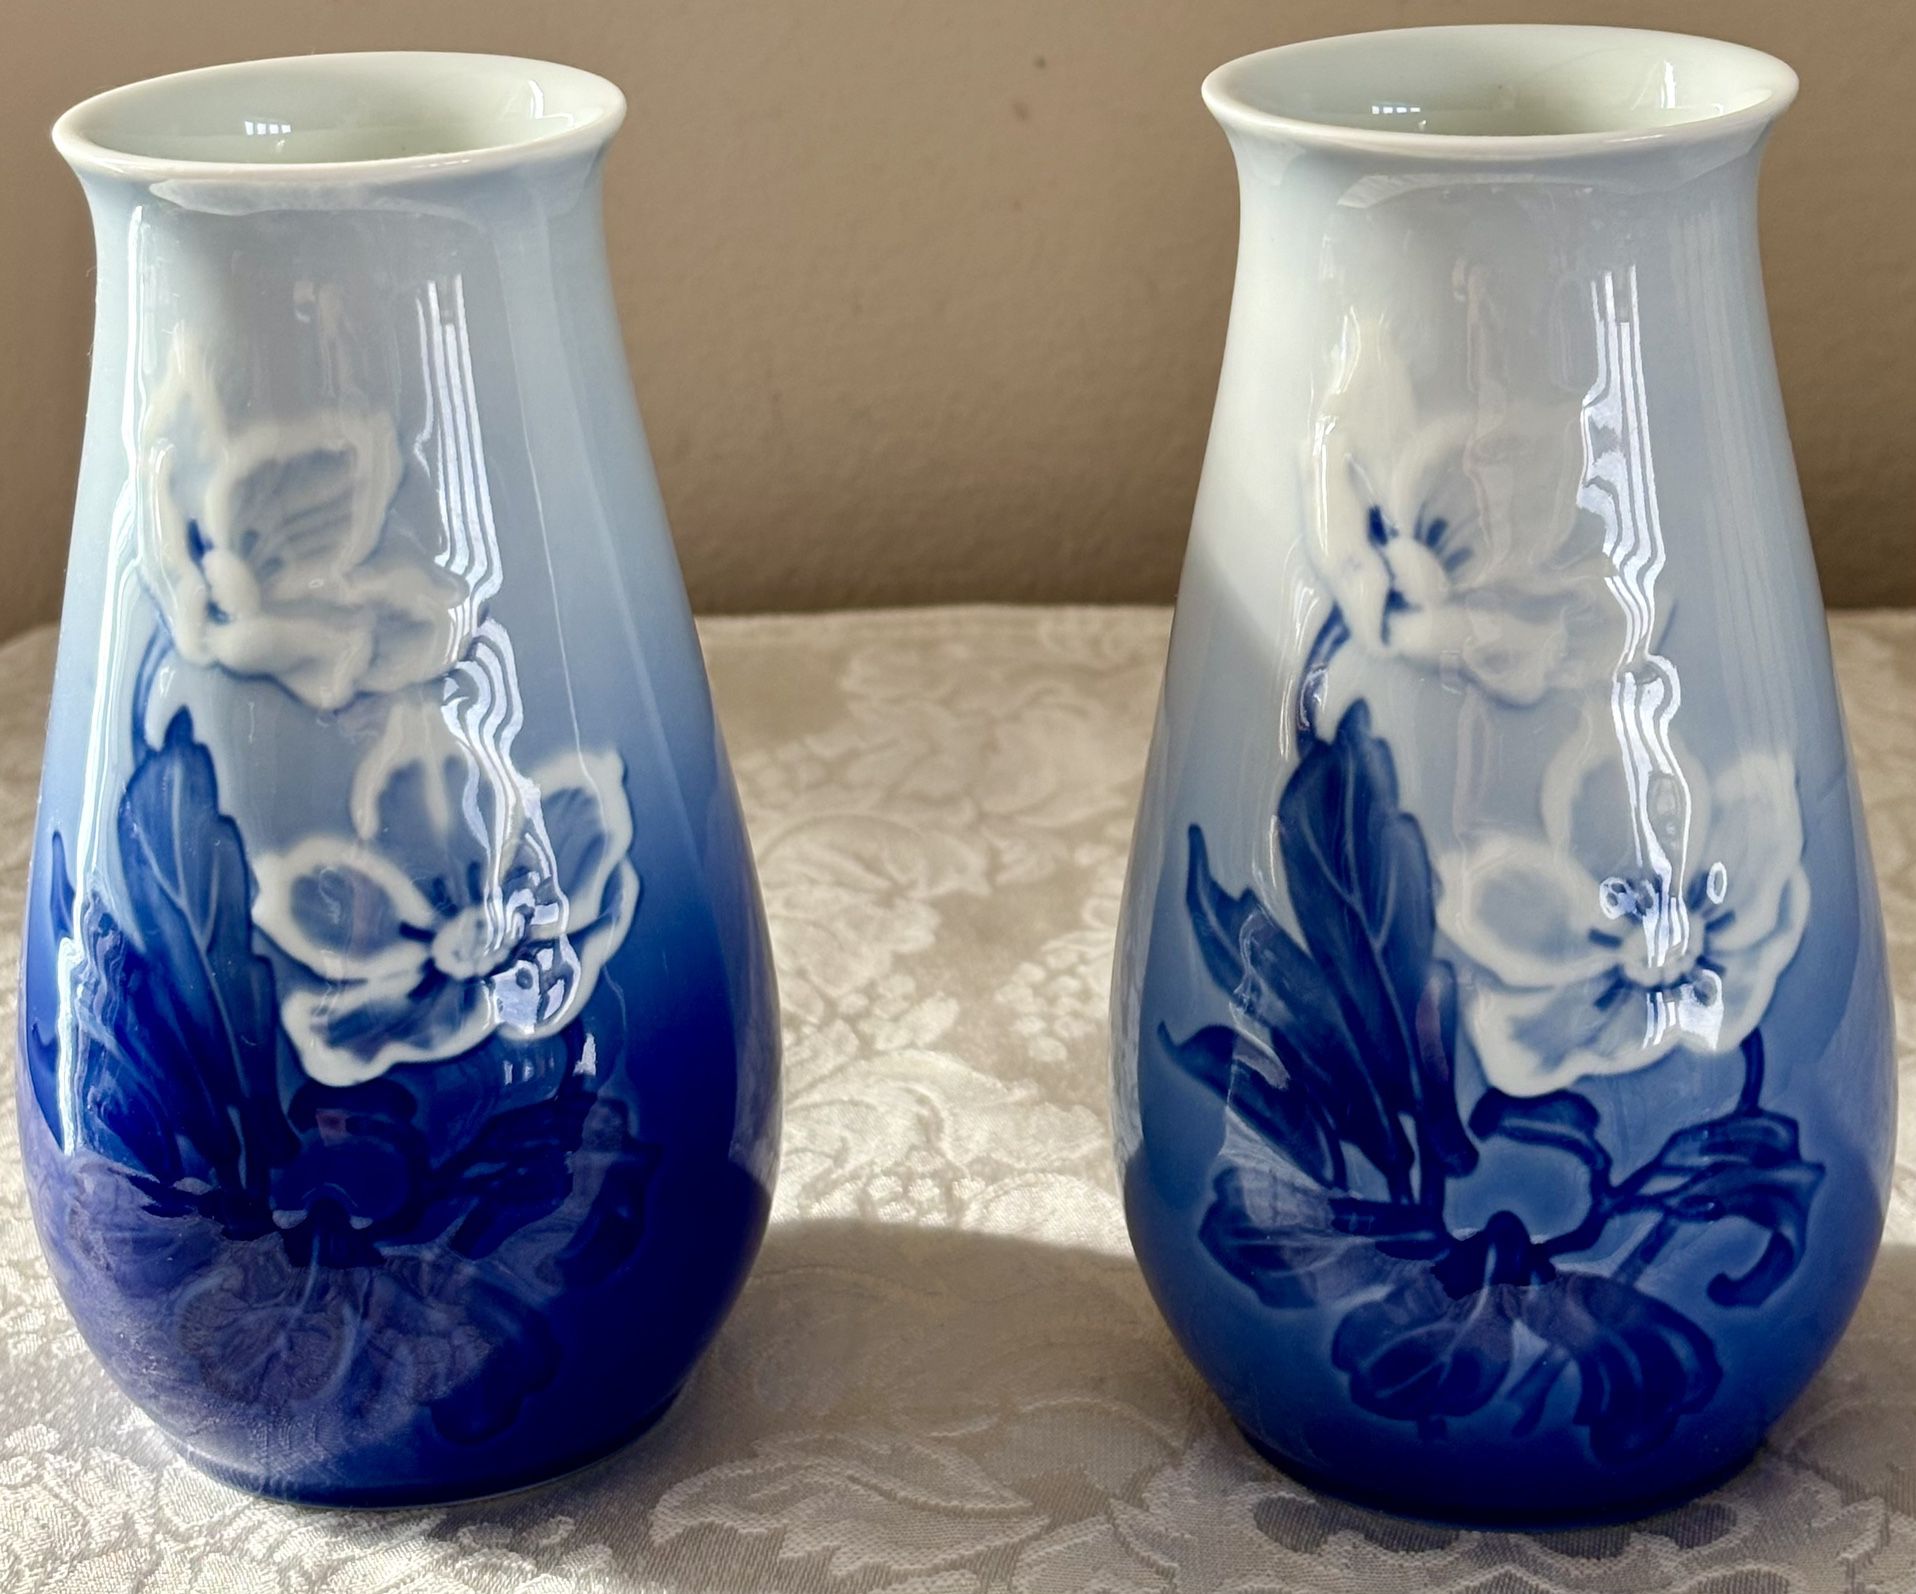 Vintage Bing And Grandahl Copenhagen Porcelain Vases 🔹Read FULL Description Below🔹